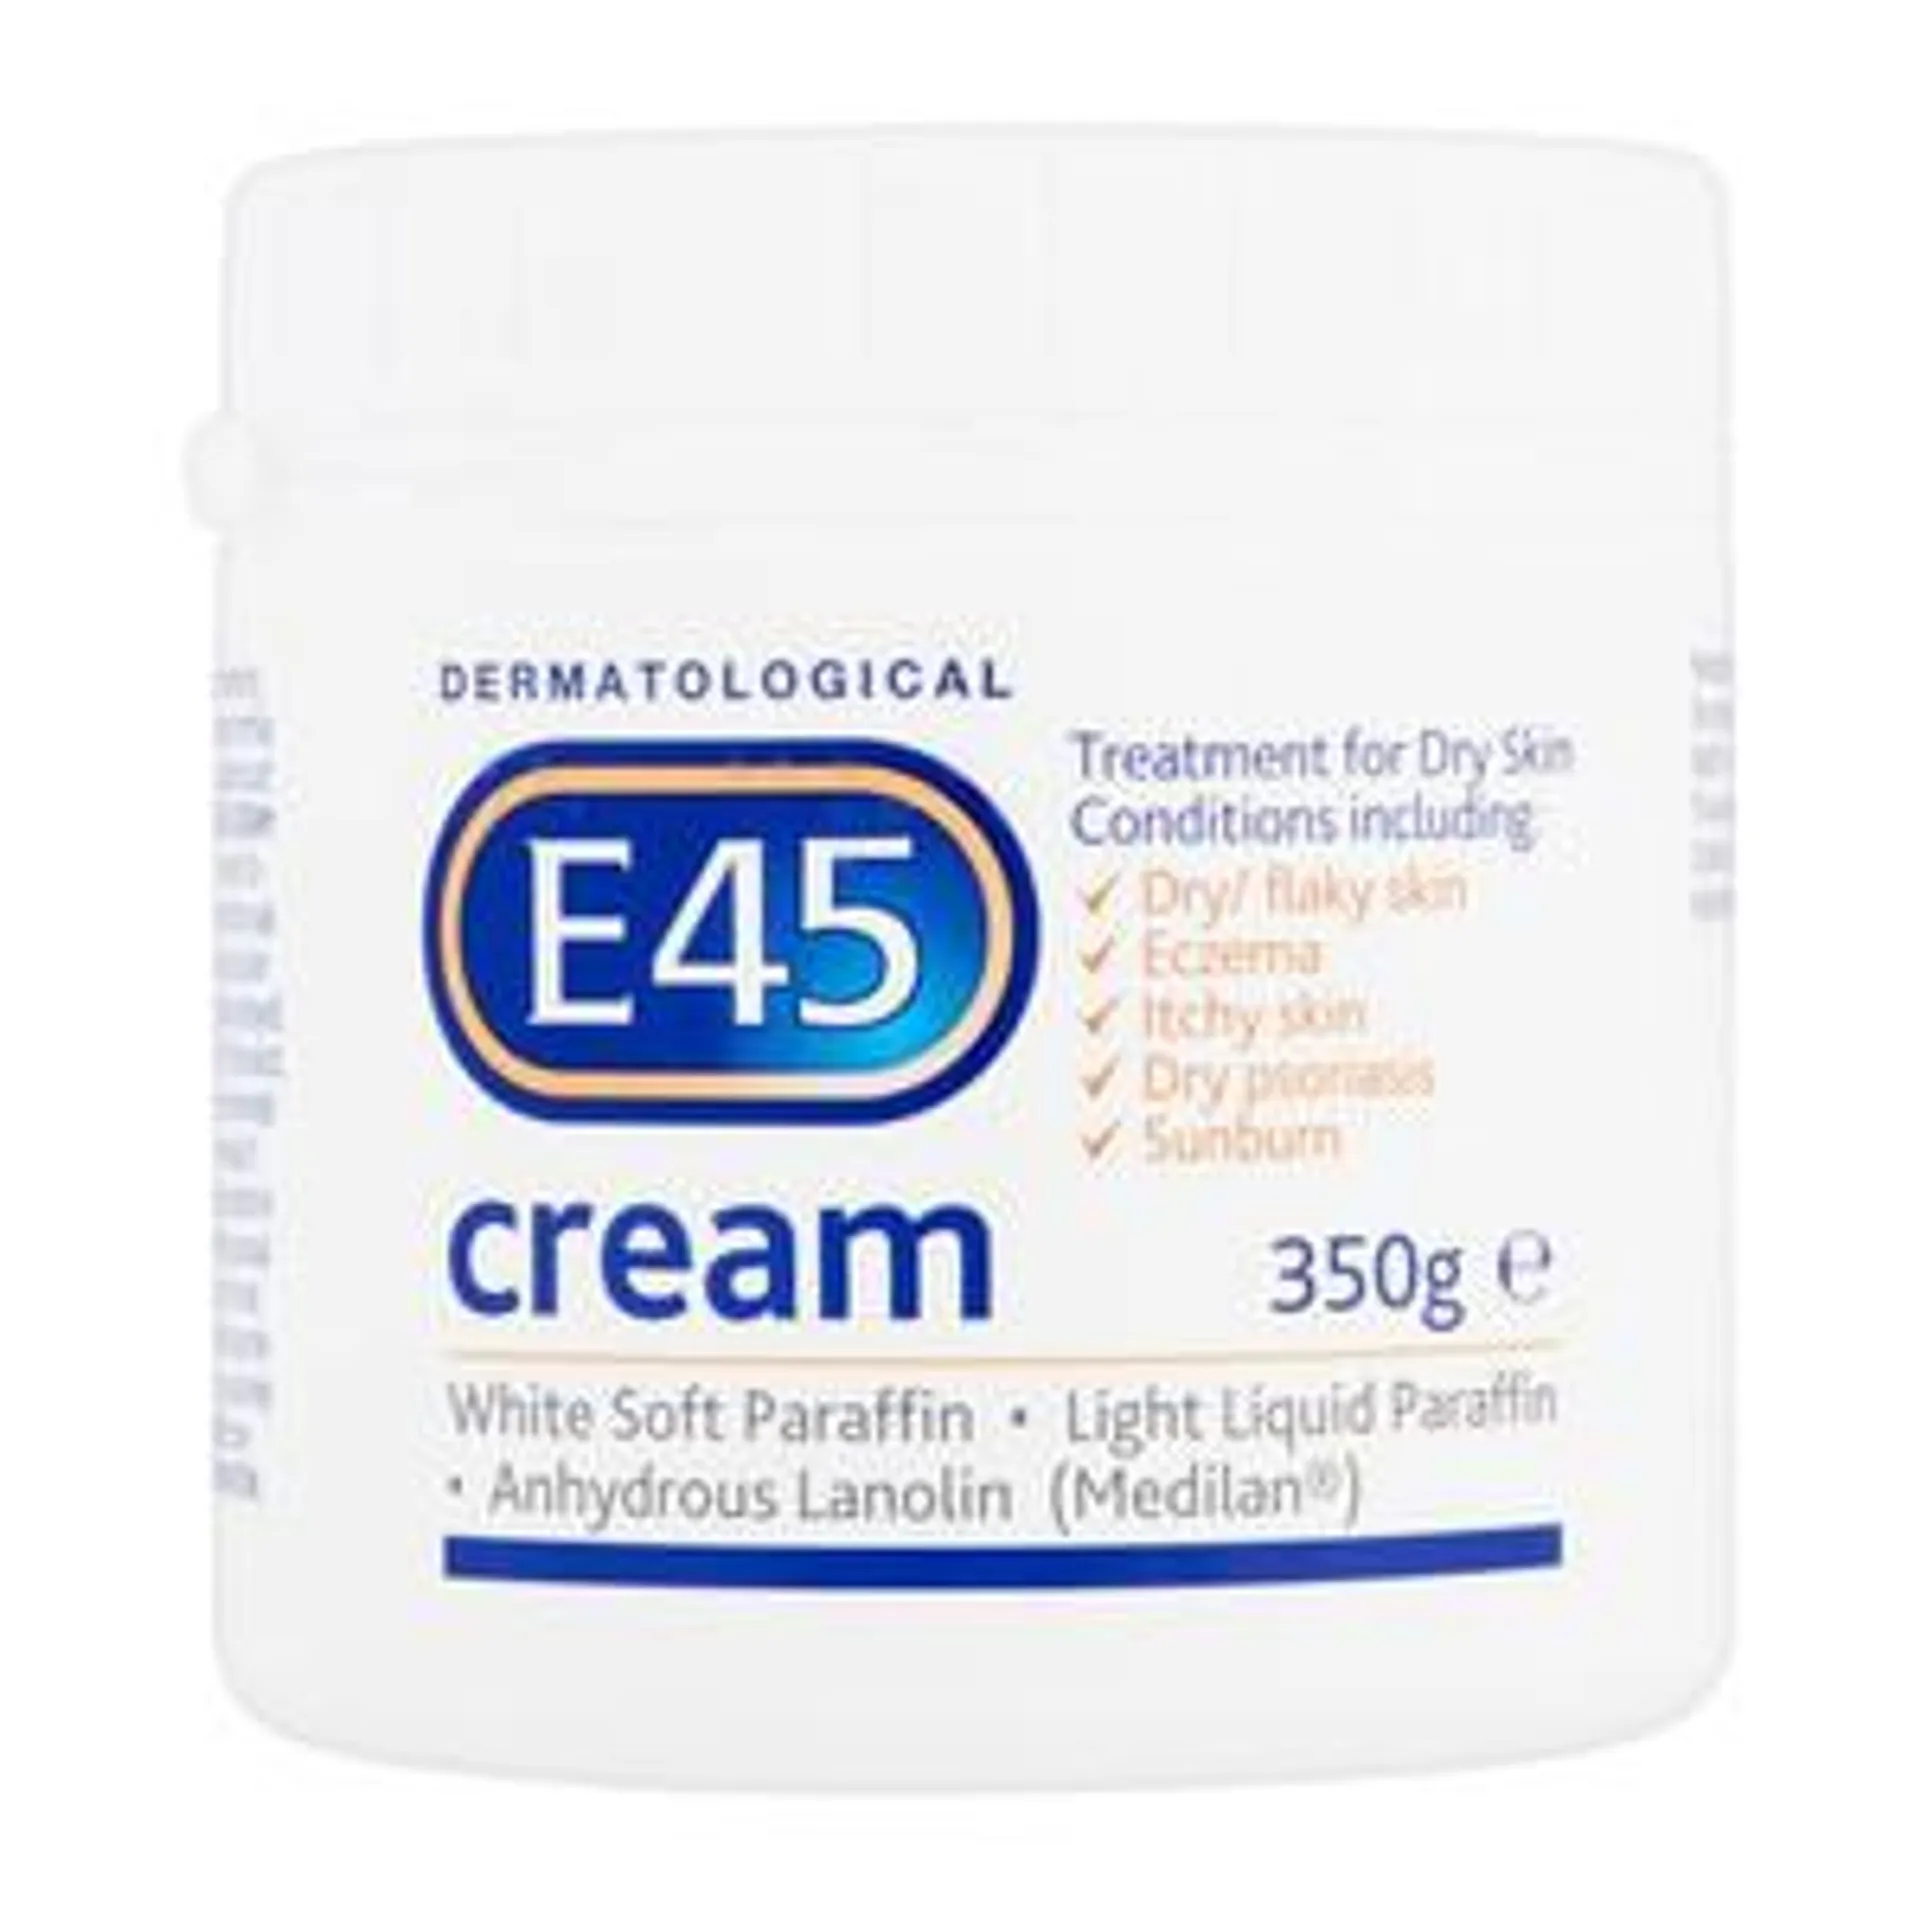 E45 Moisturising Cream 350g